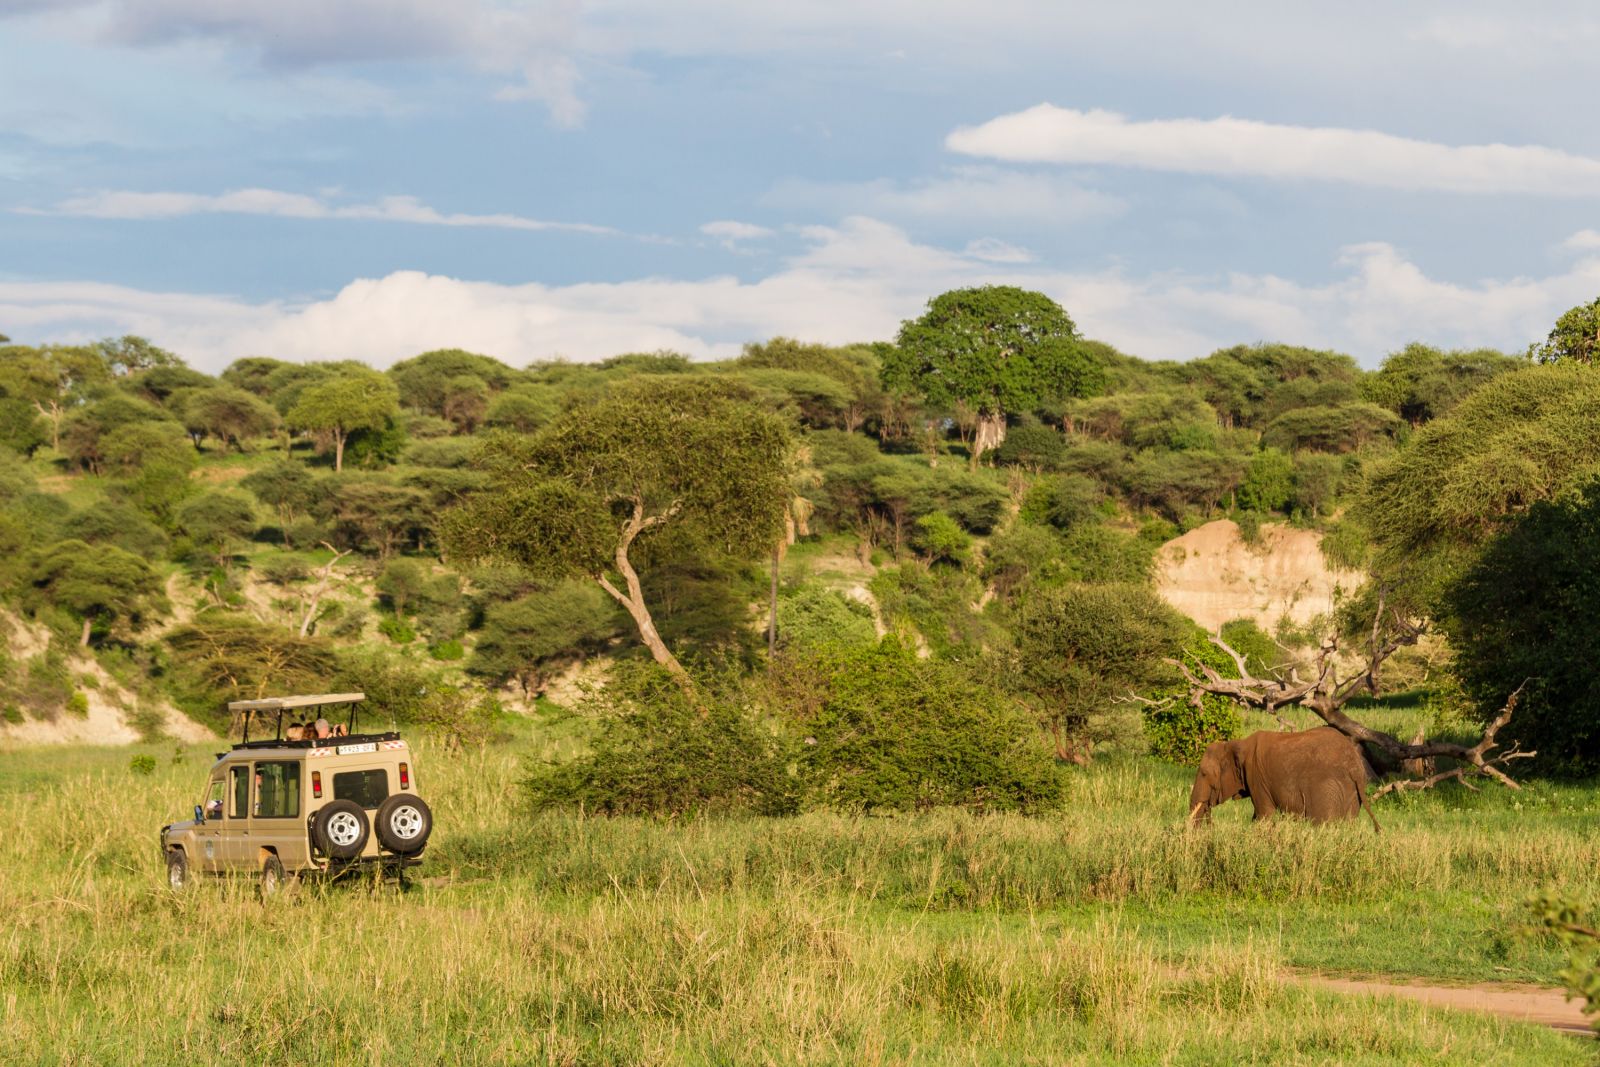 Elefanten im Tarangire-Nationalpark, Tansania